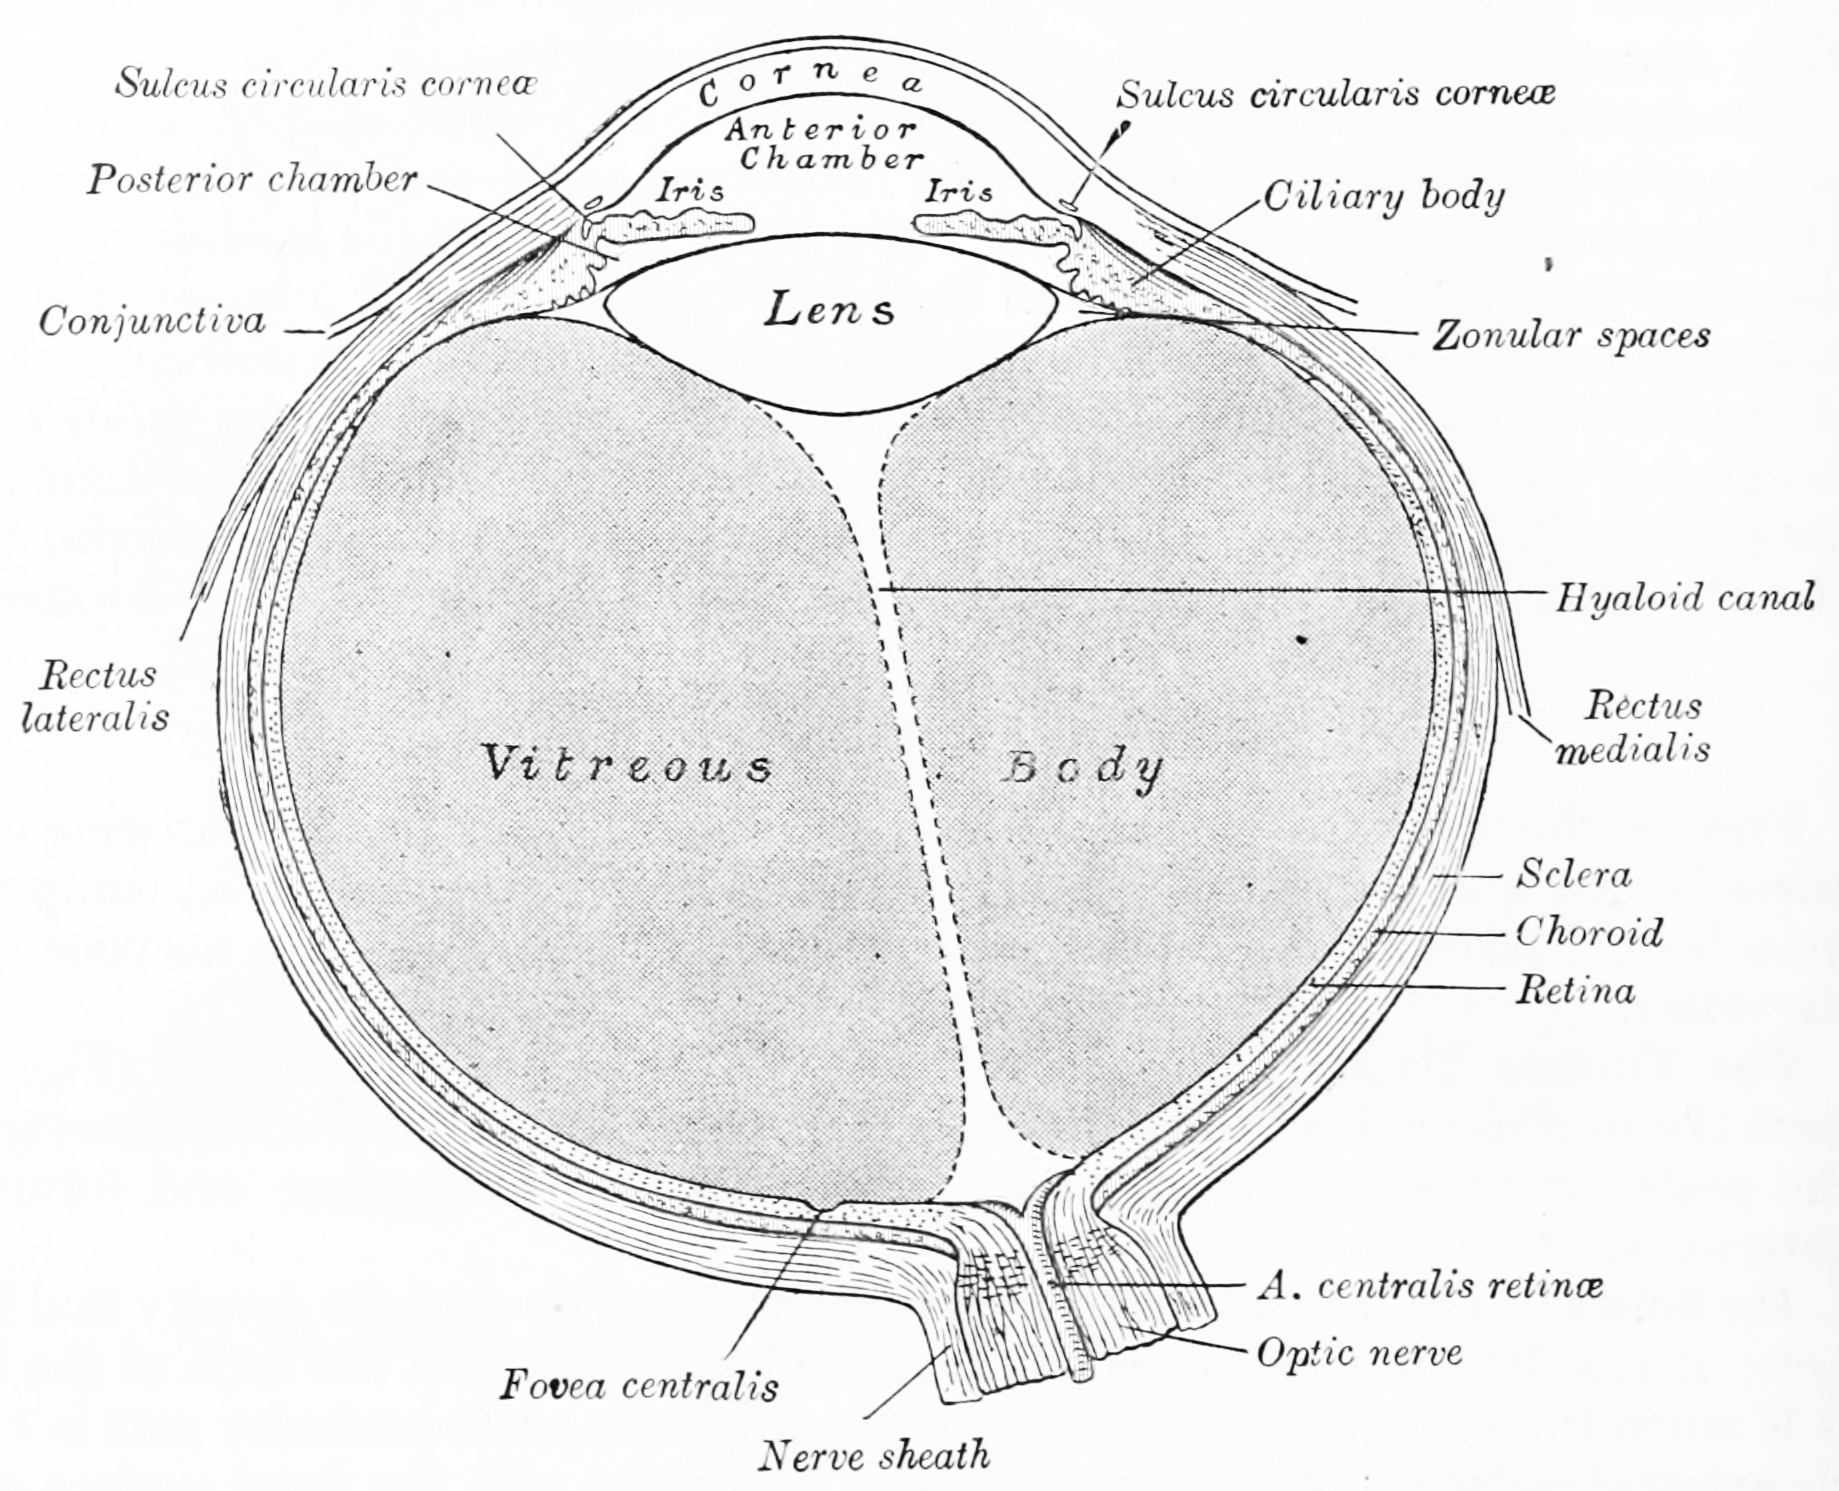 Horizontal section of the eyeball. From Gray Henry, Anatomy of the Human Body. 20th Edition, Lea & Febiger, Philadelphia & New York, 1918